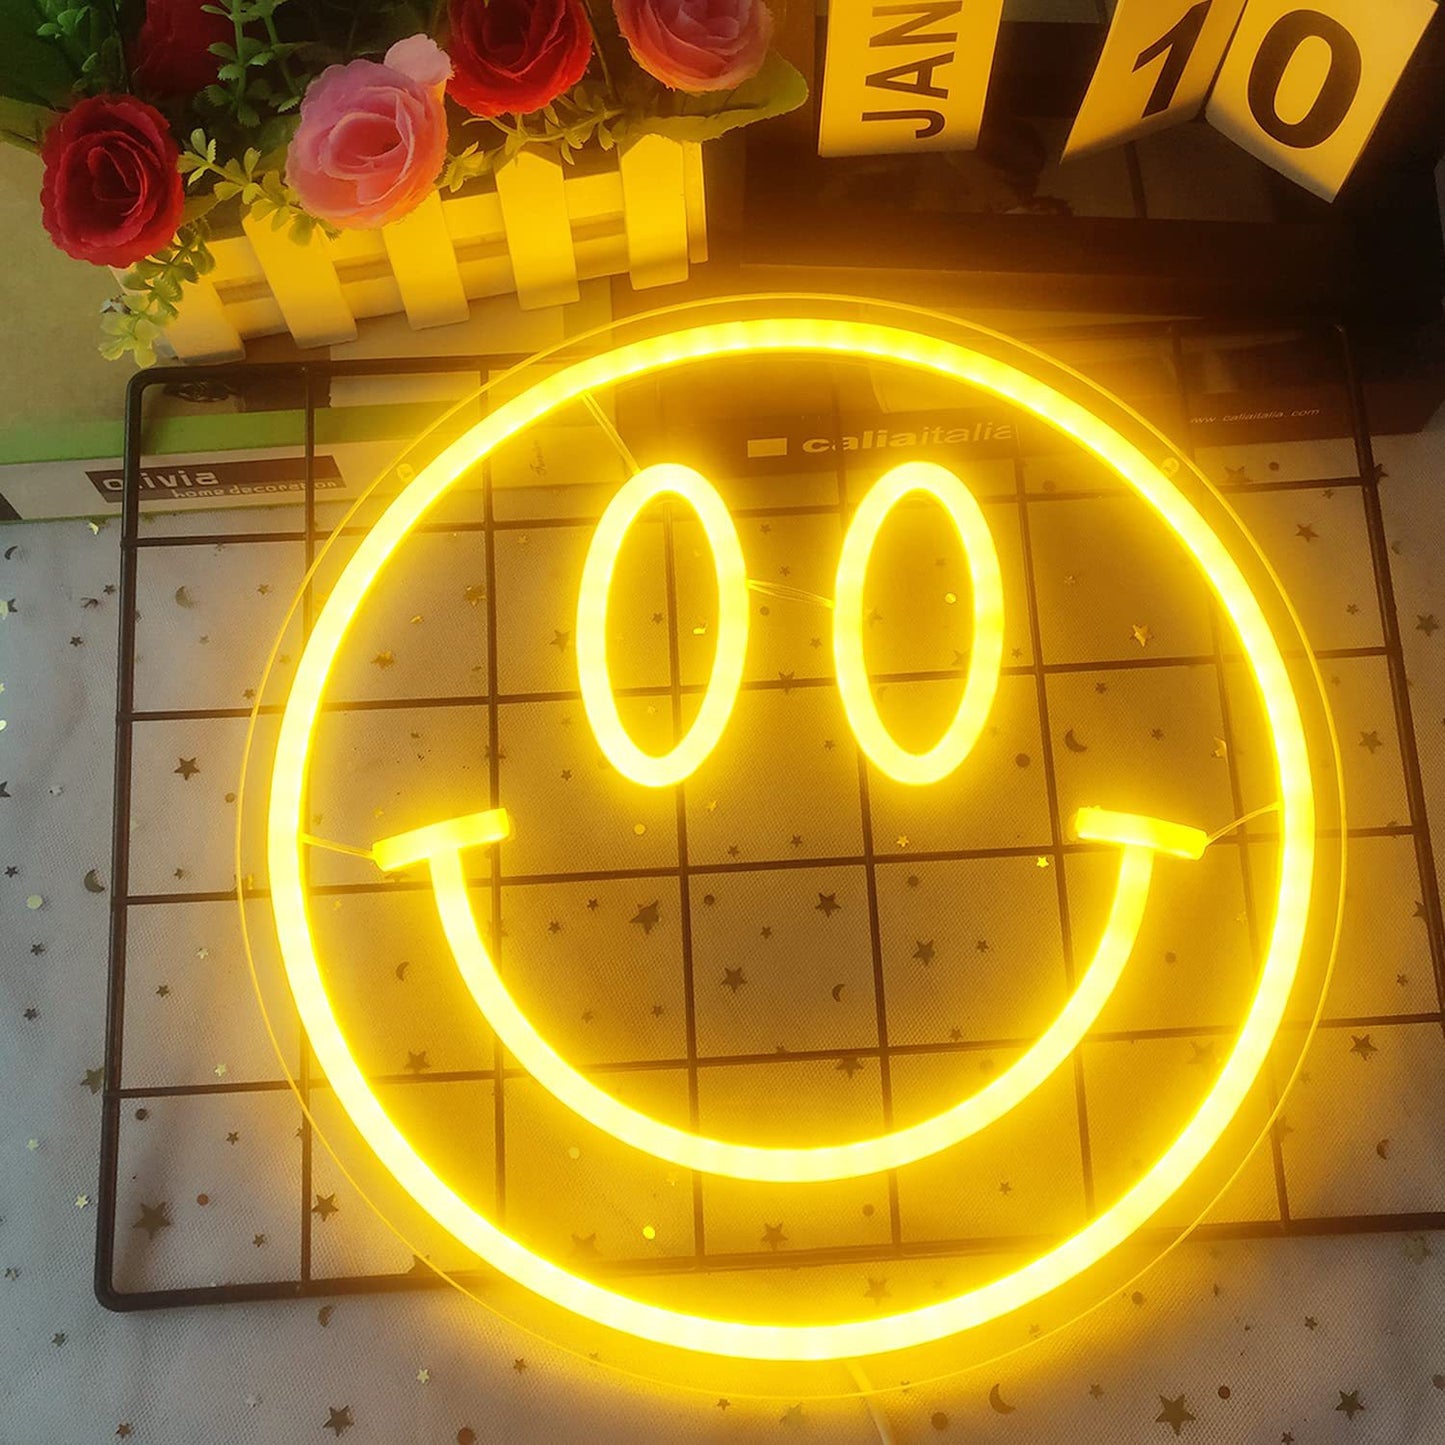 Smile - Neon Light